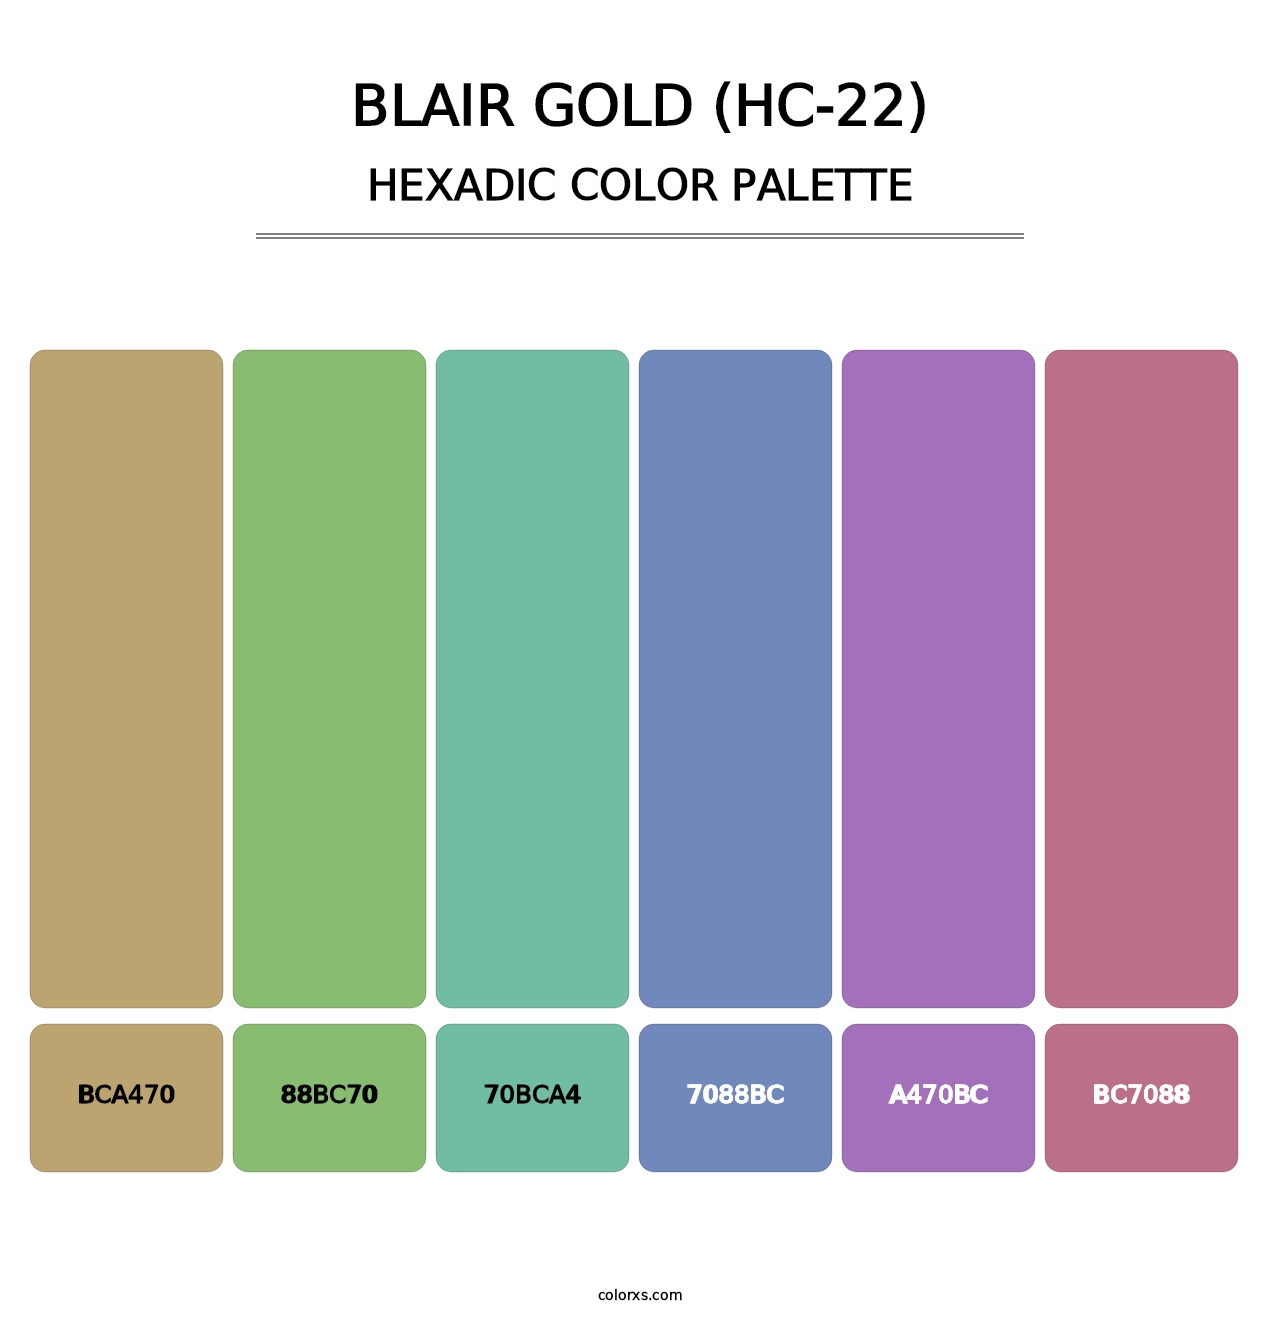 Blair Gold (HC-22) - Hexadic Color Palette